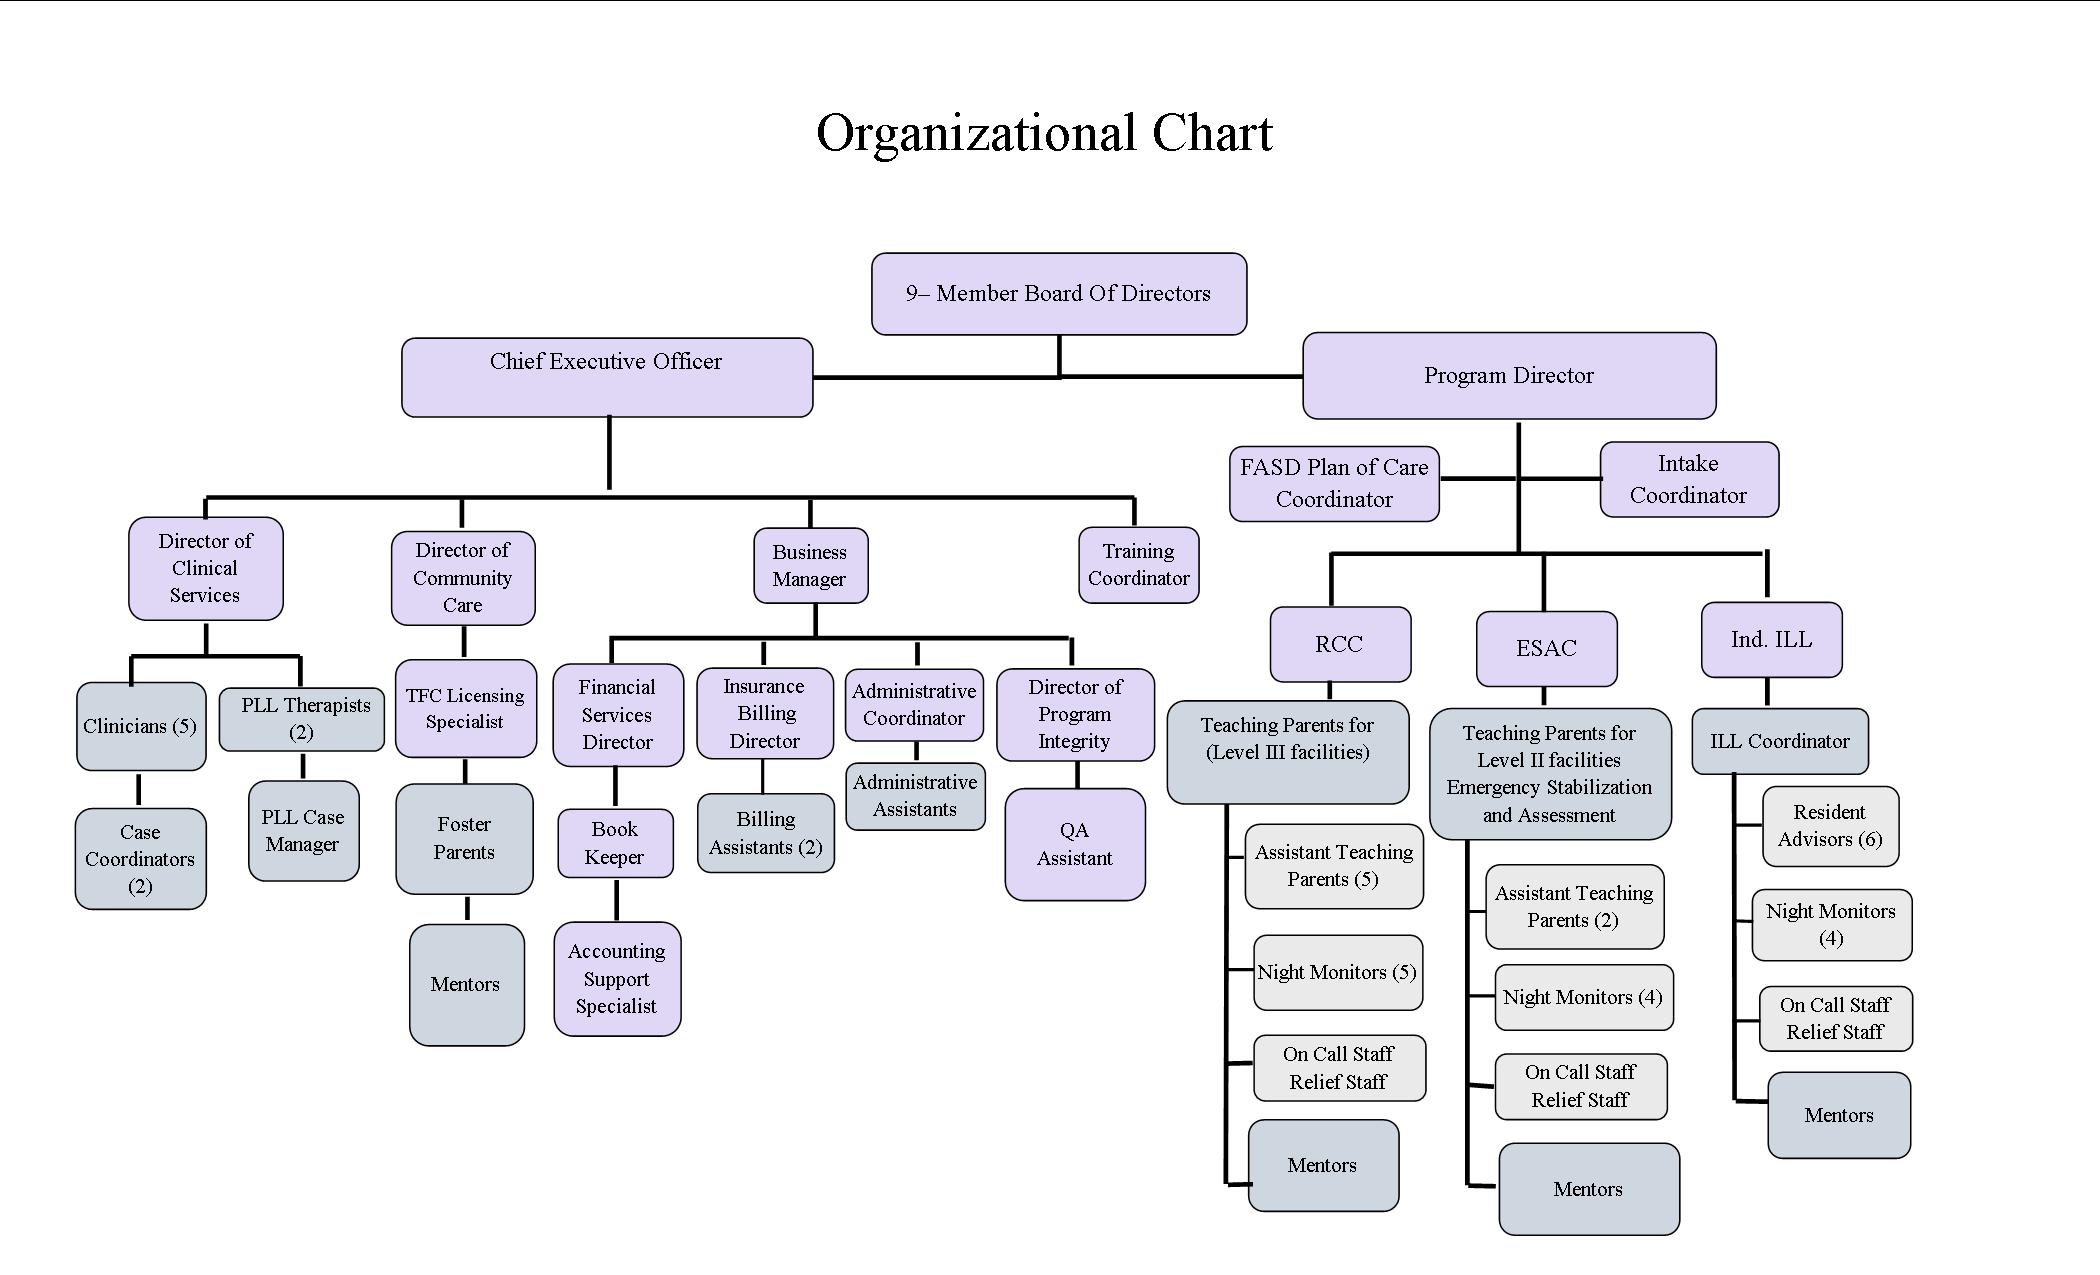 She Organization Chart